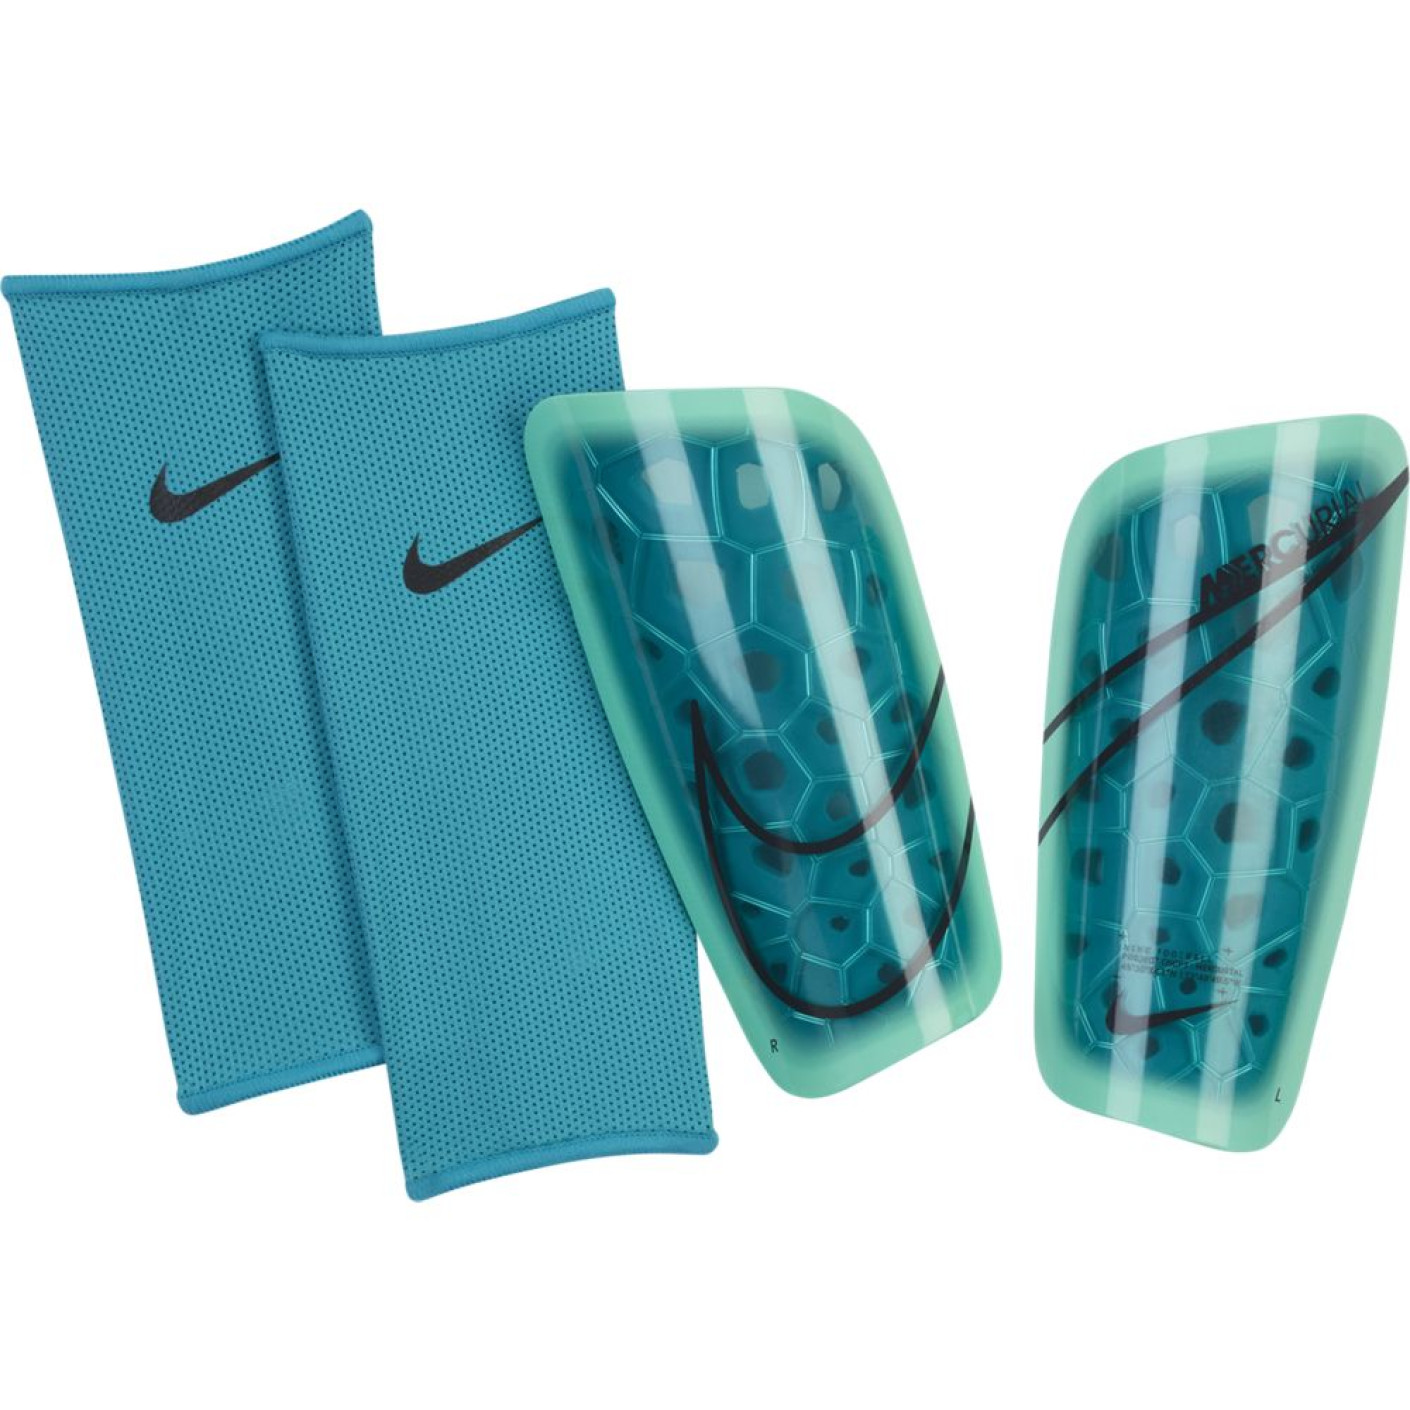 Protège-tibias Nike Mercurial Lite Bleu Turquoise Noir 